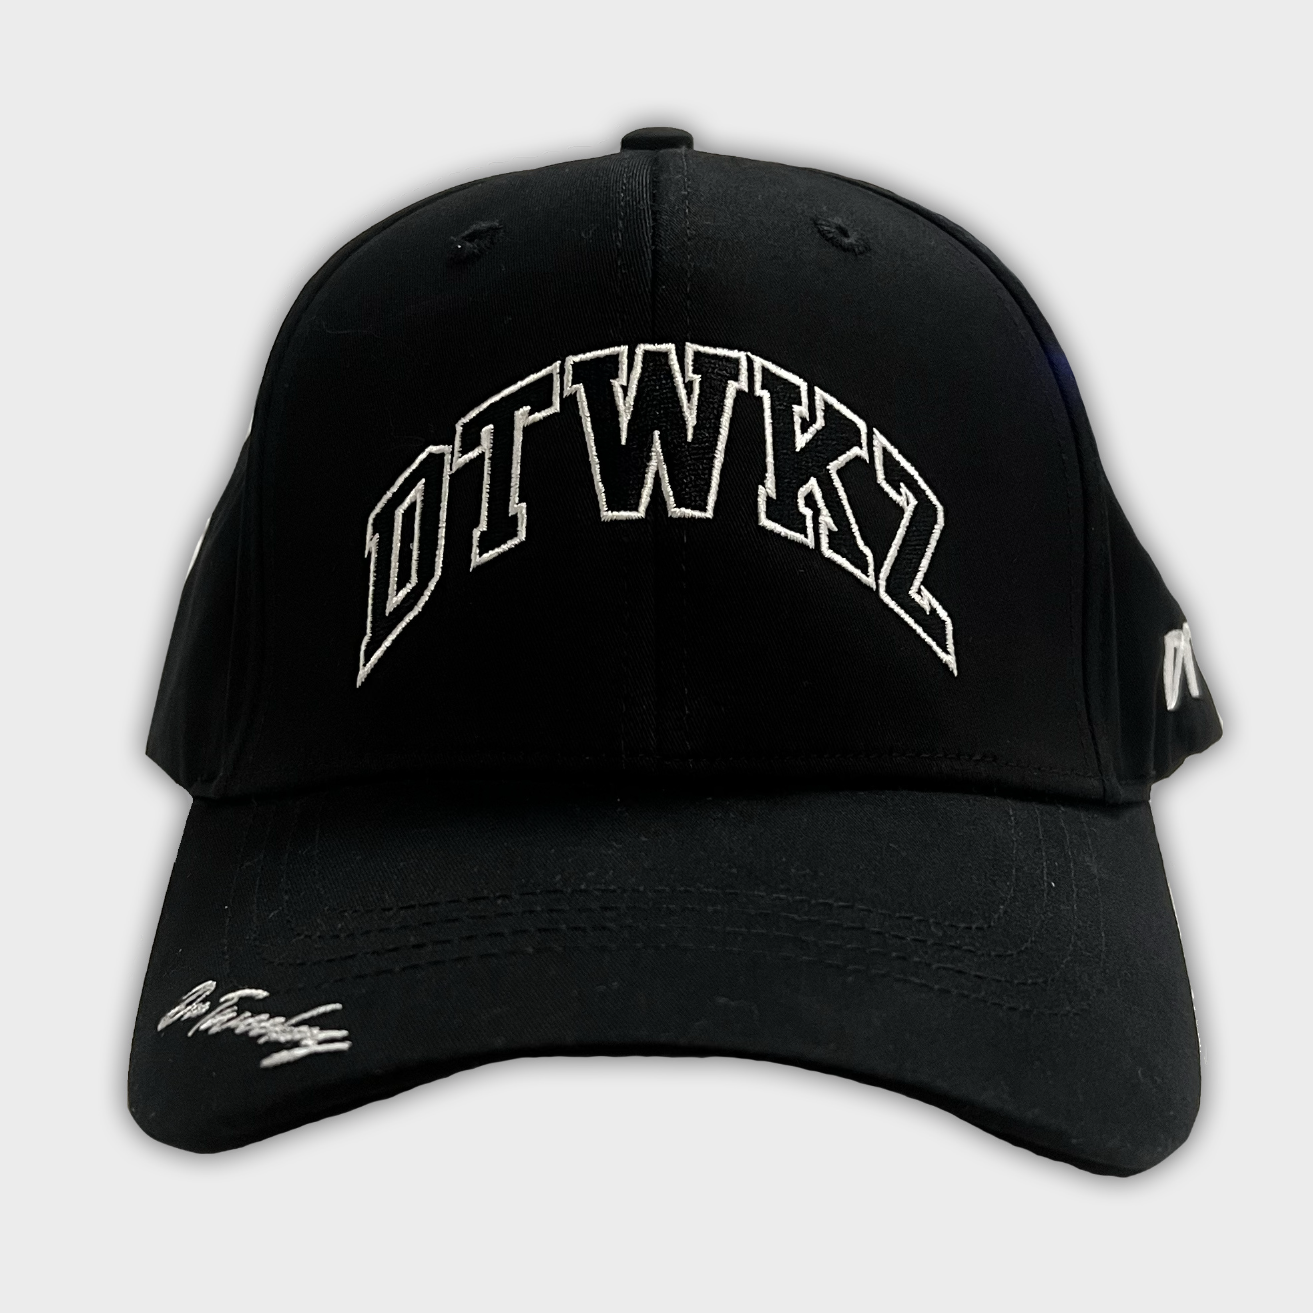 DTWKZ - Baseball Cap